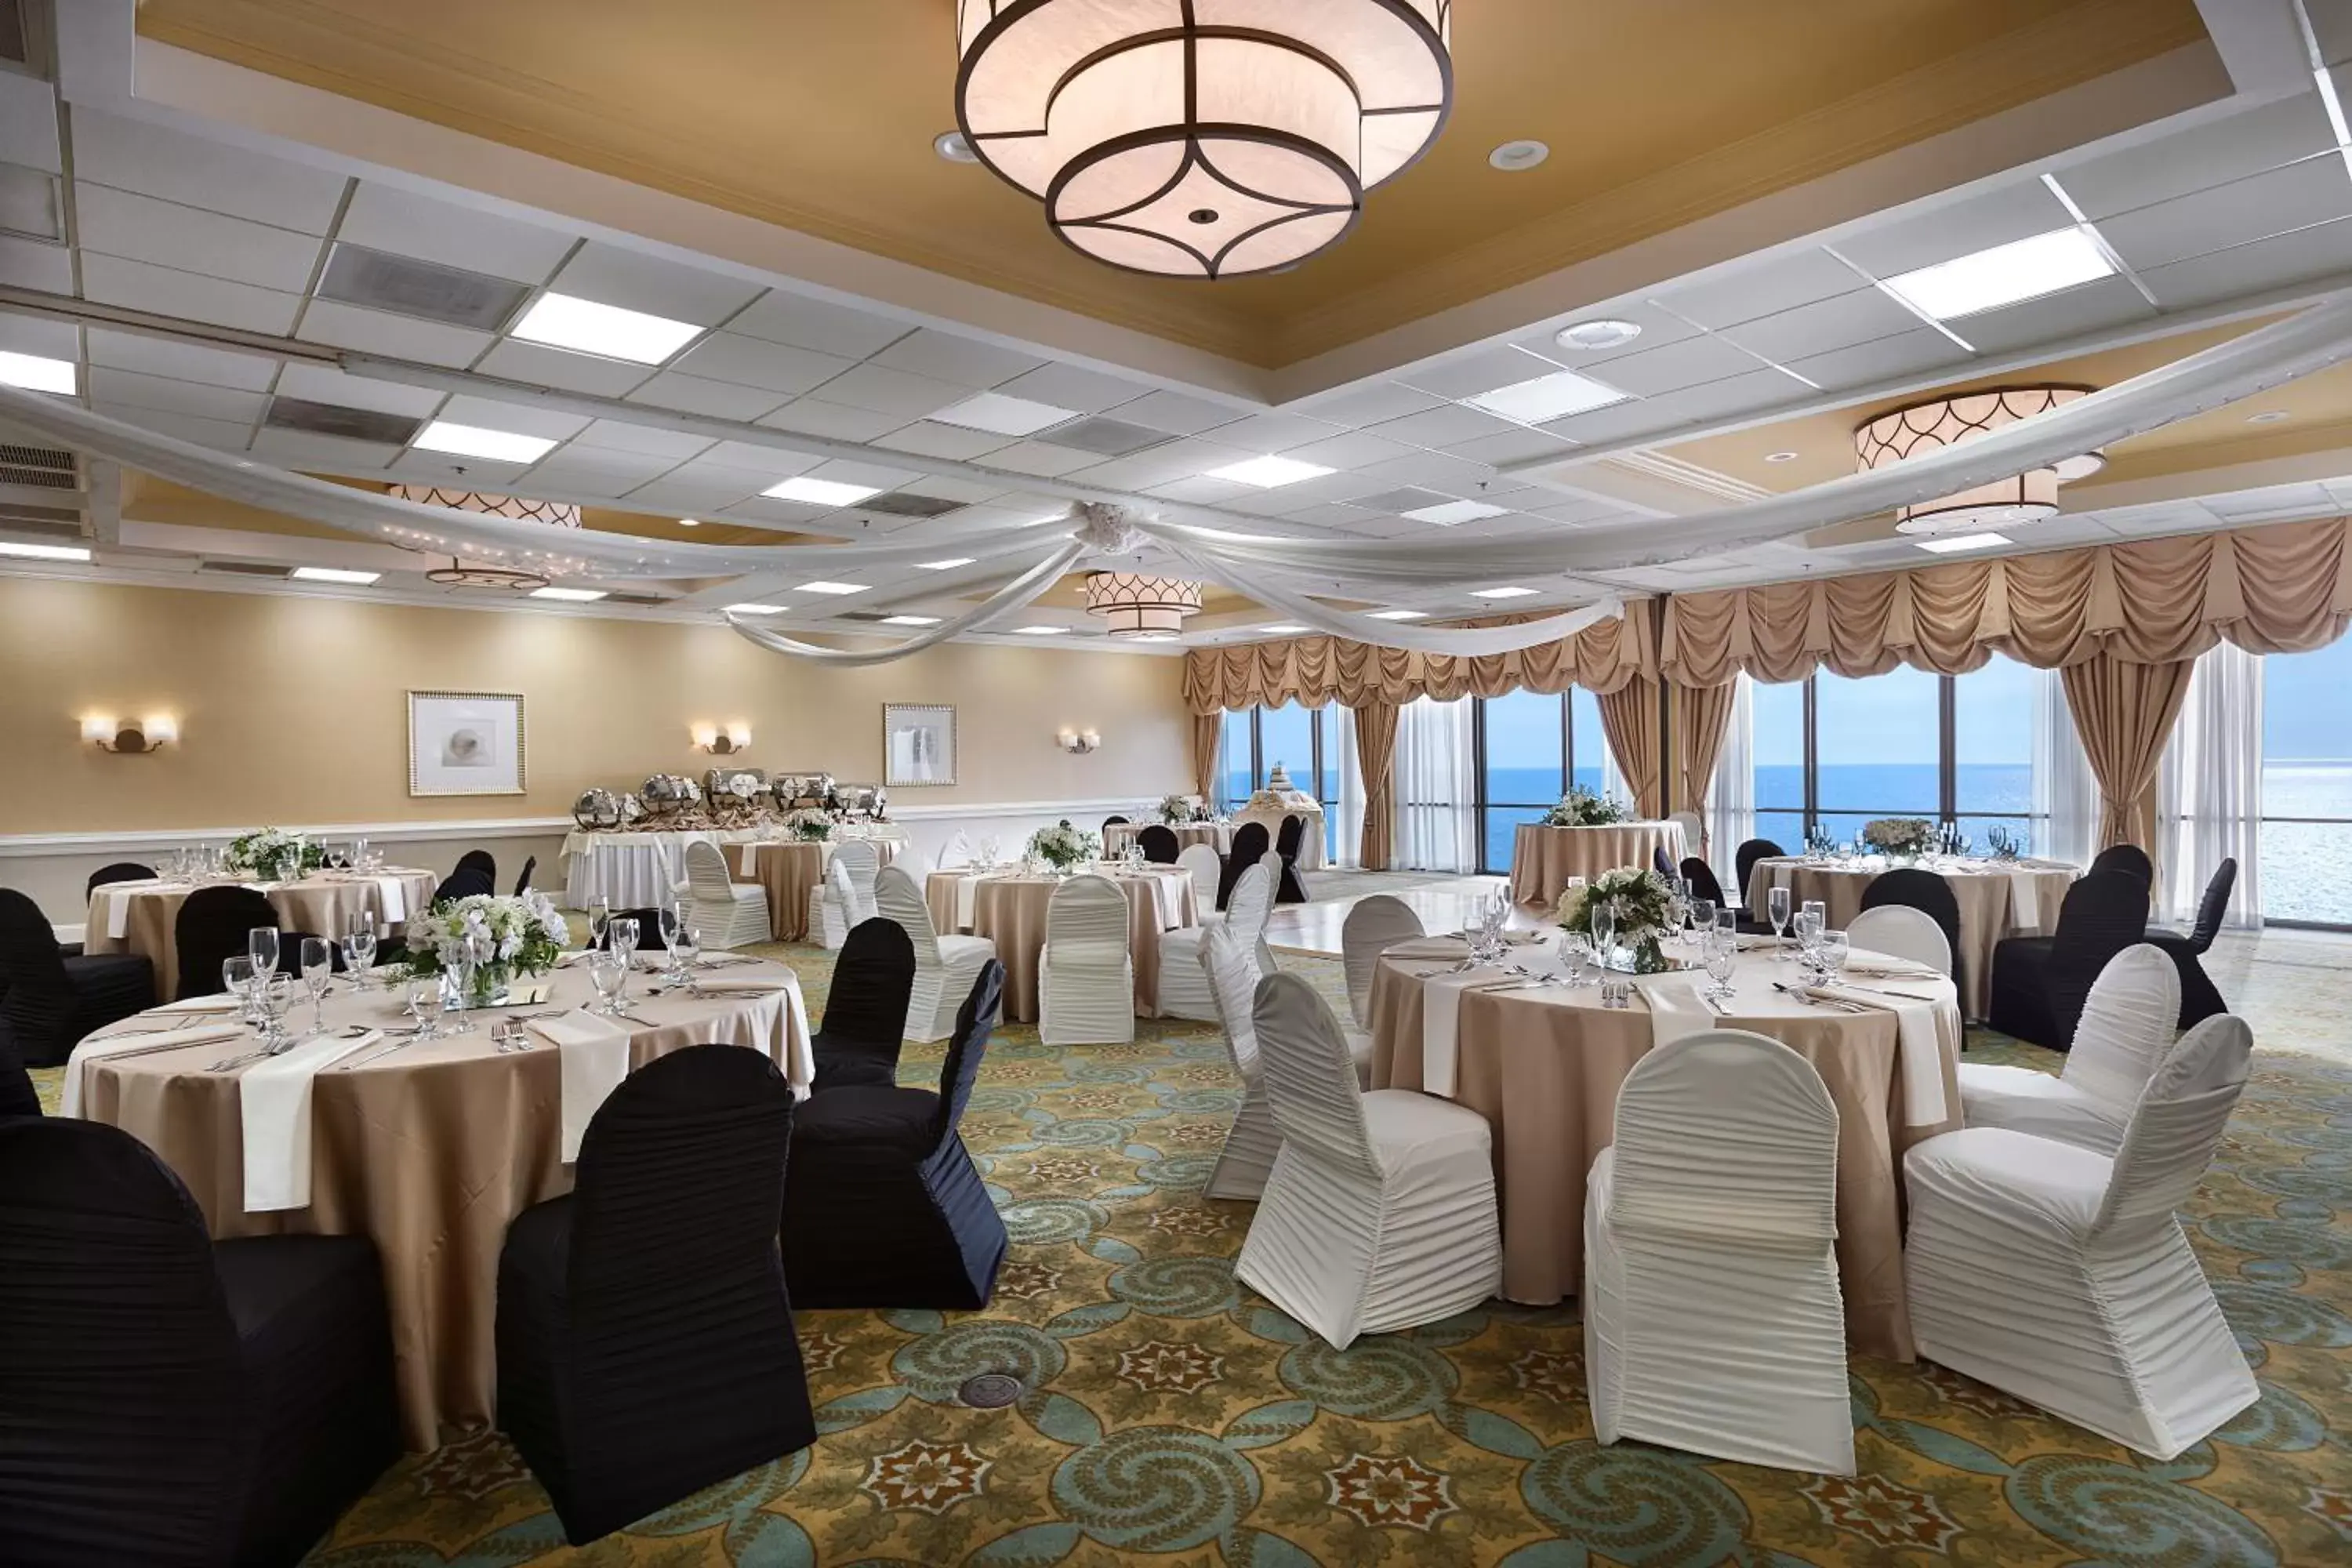 Banquet/Function facilities, Banquet Facilities in Breakers Resort Hotel